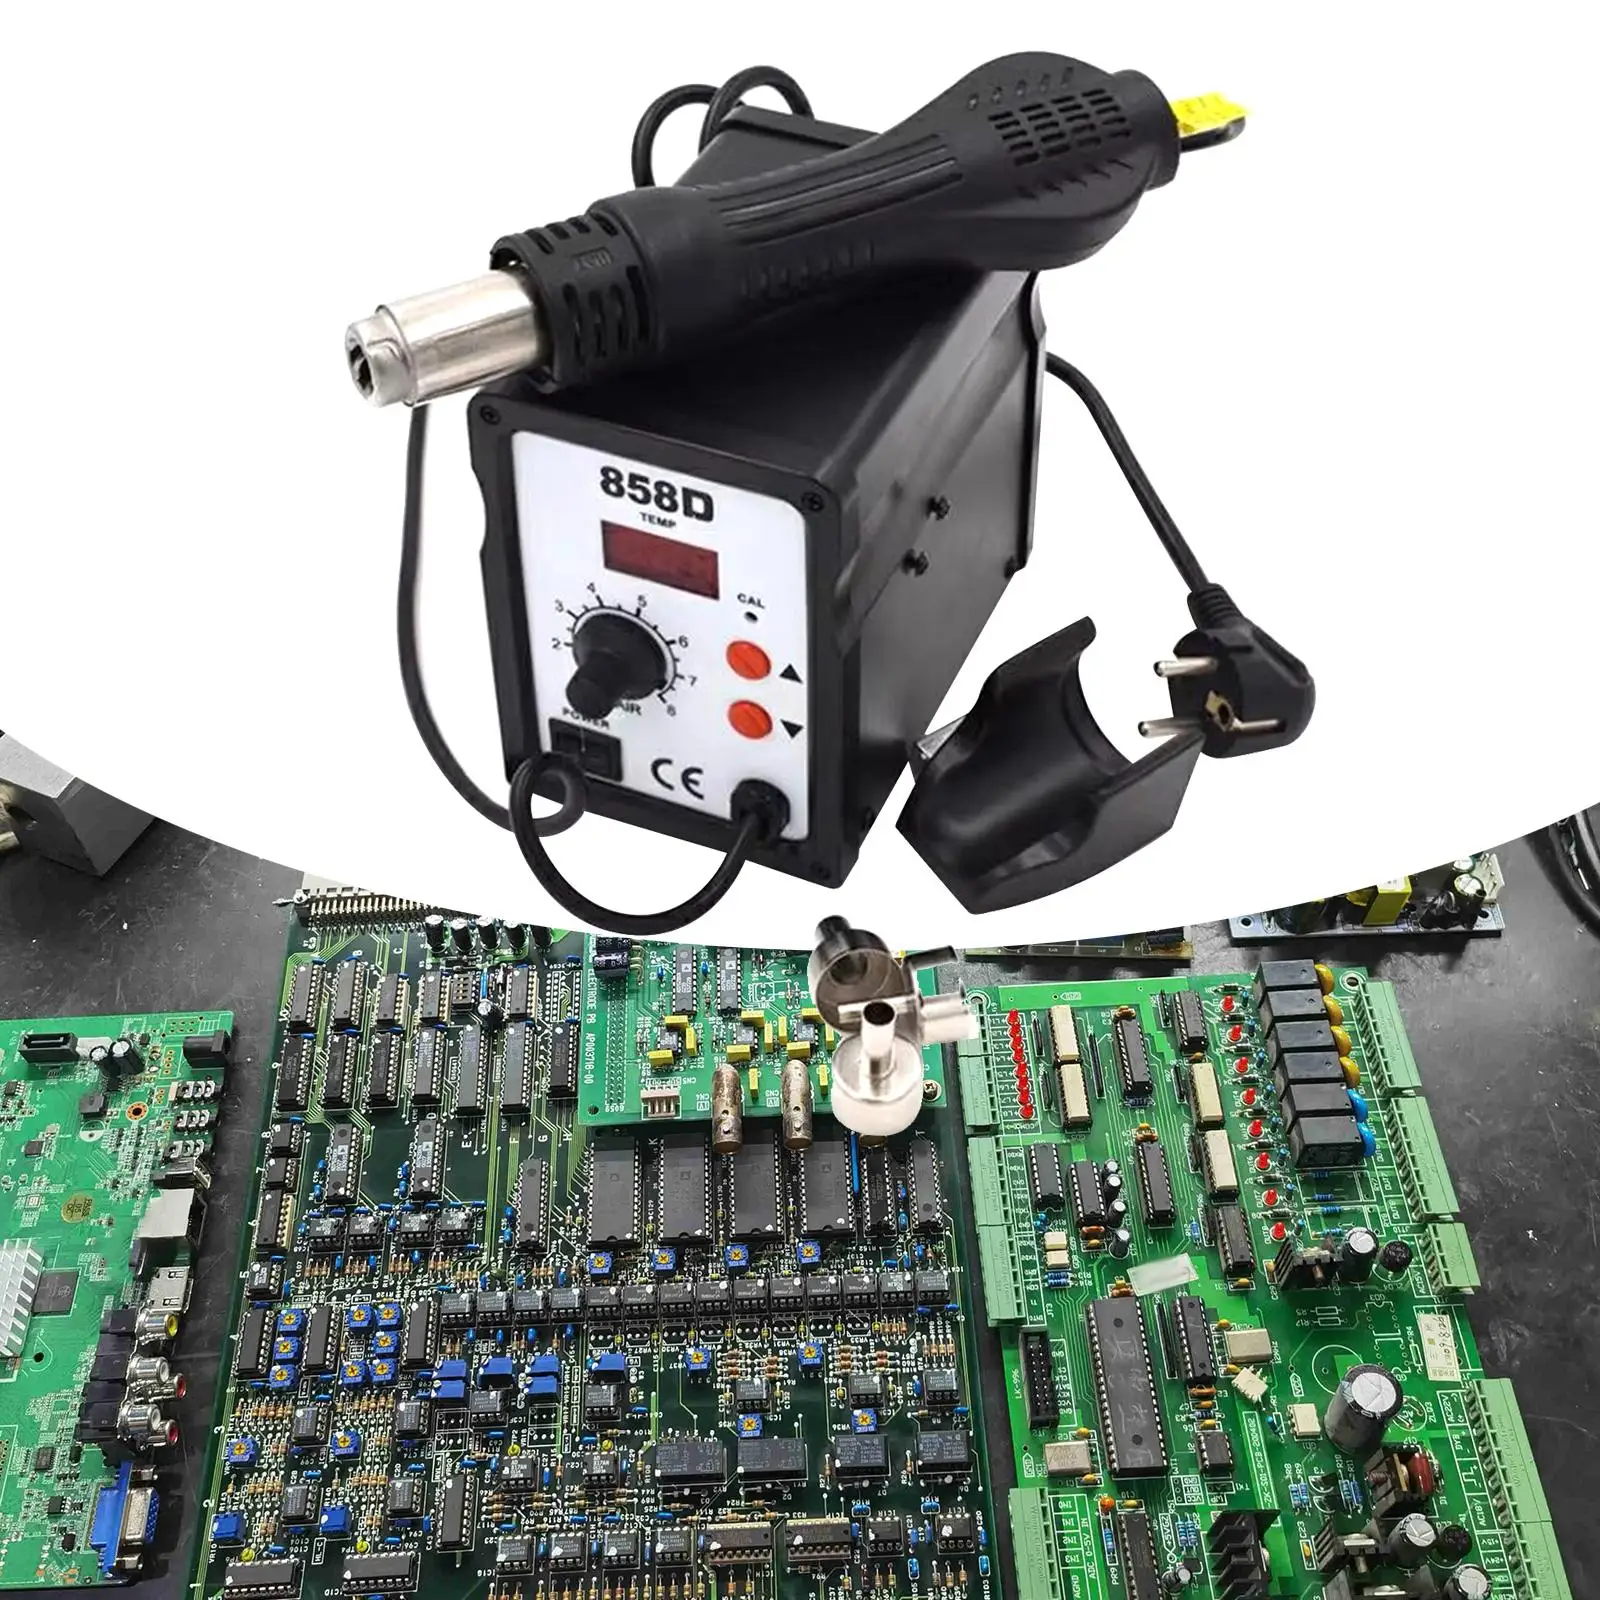 Desoldering Station Adjustable Portable Replacing Nozzle Digital Soldering Station for Electric Appliance Maintenance Phone